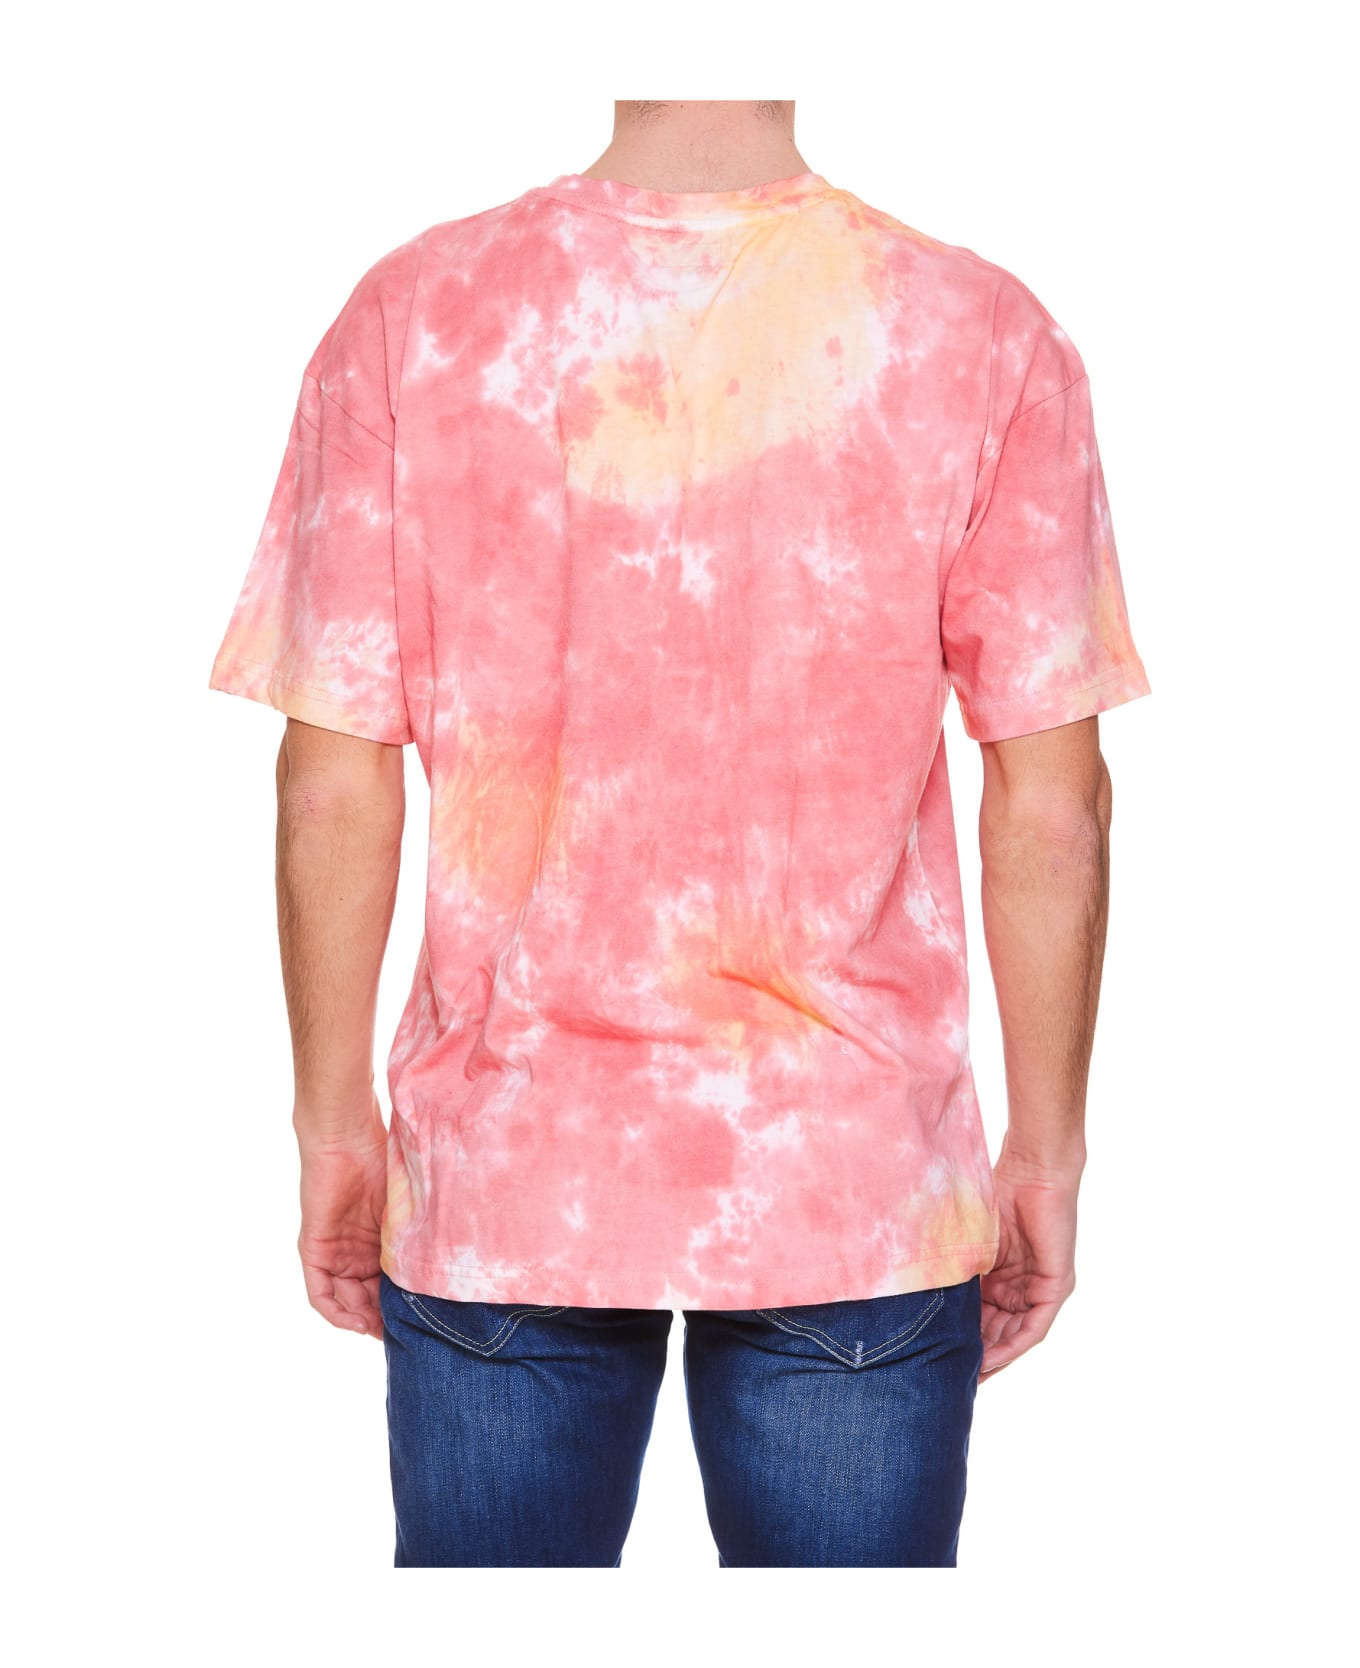 Market Tie Dye T-shirt - PINK